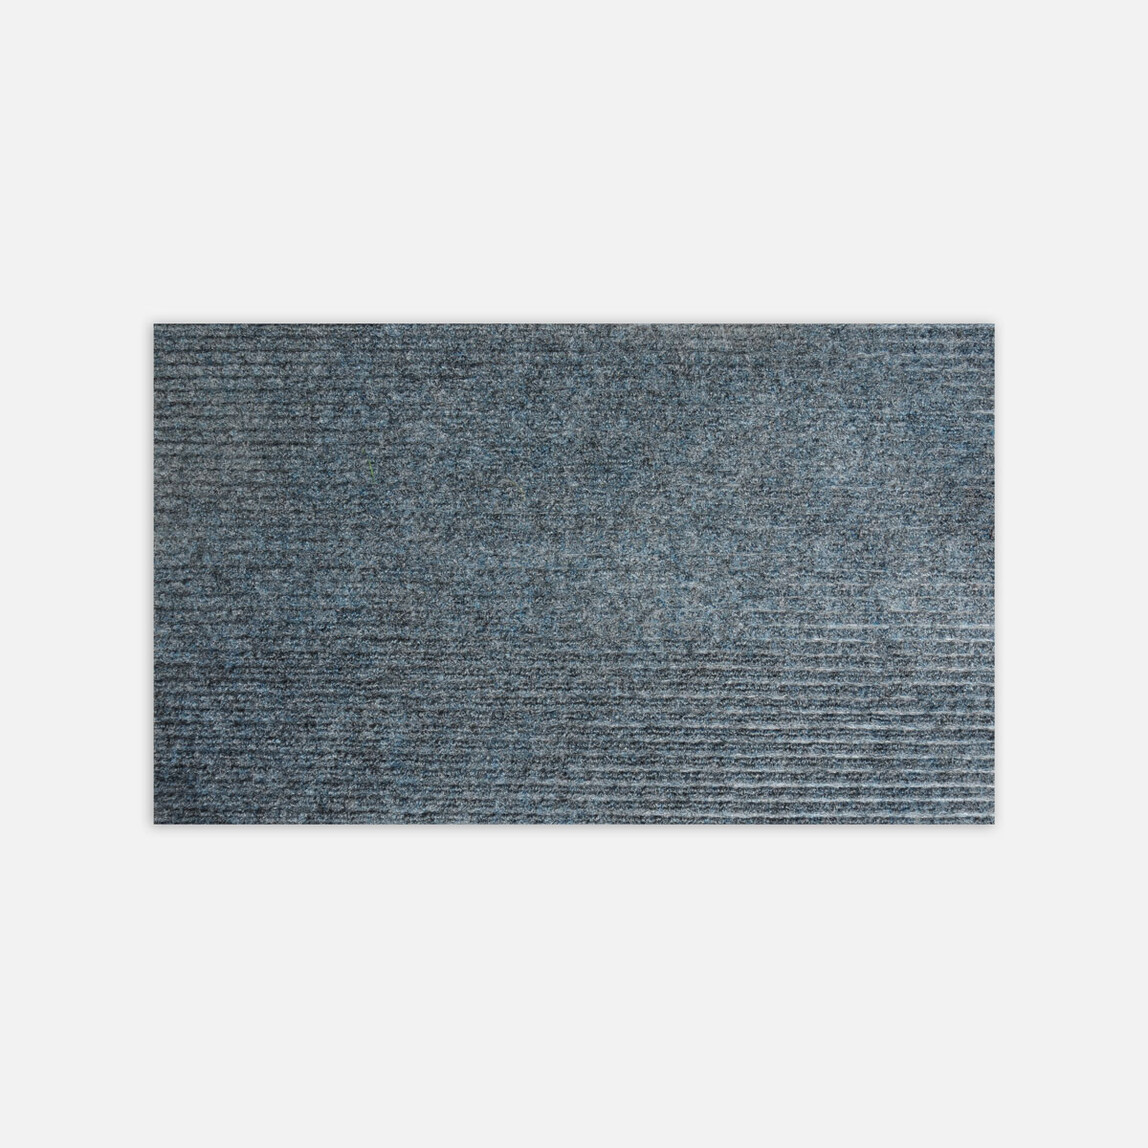    Güven Collection Gri Mavi Keçe Paspas 50x80 cm  